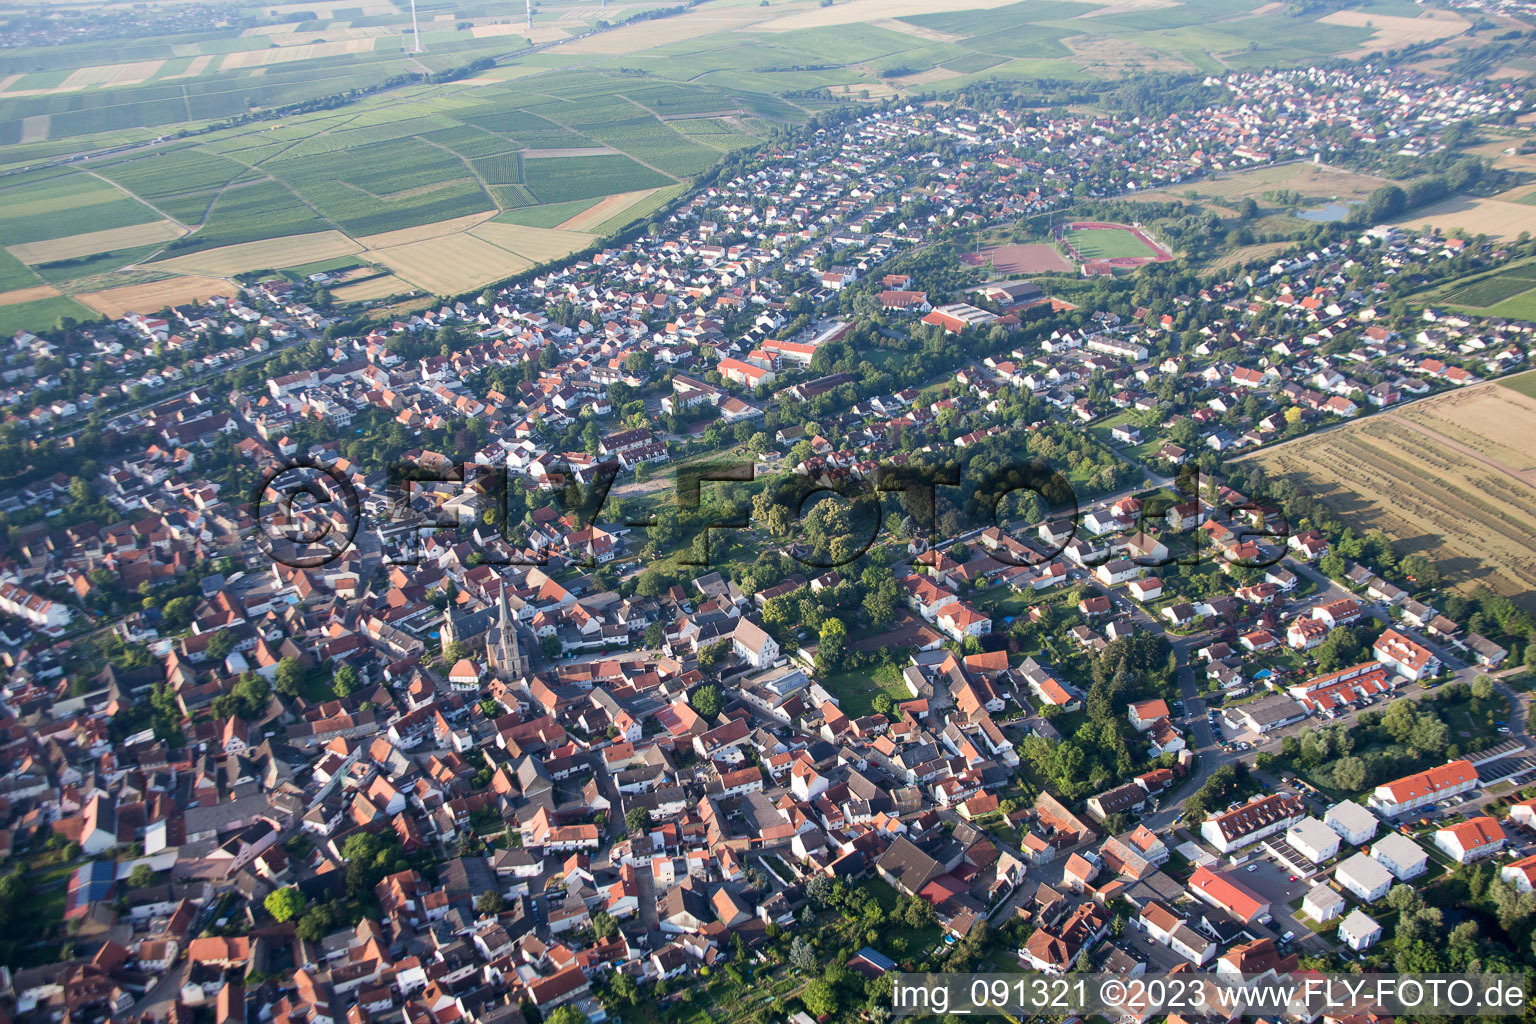 Saulheim in the state Rhineland-Palatinate, Germany